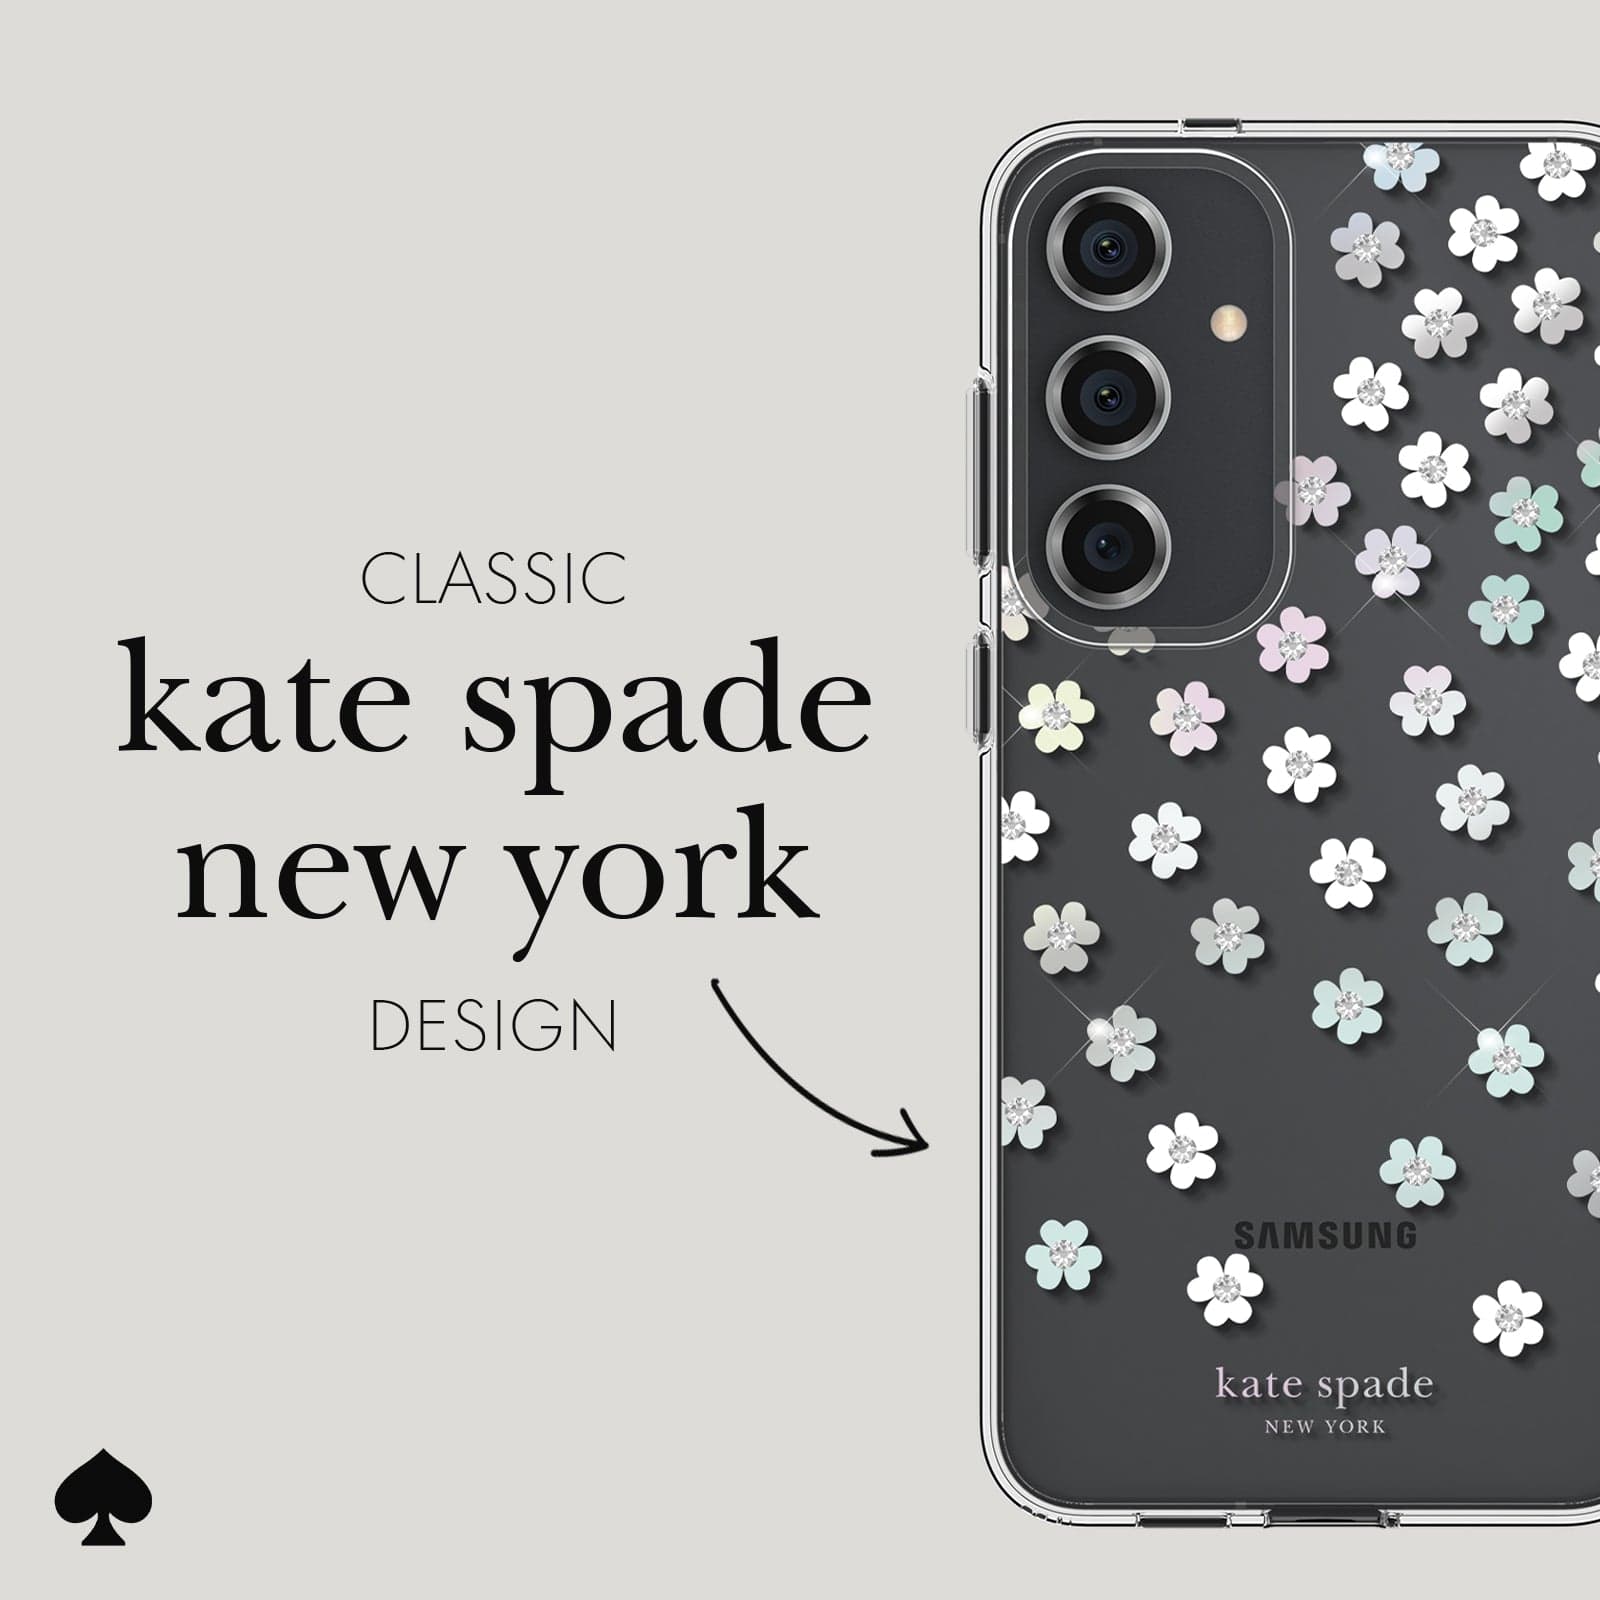 CLASSIC KATE SPADE NEW YORK DESIGN